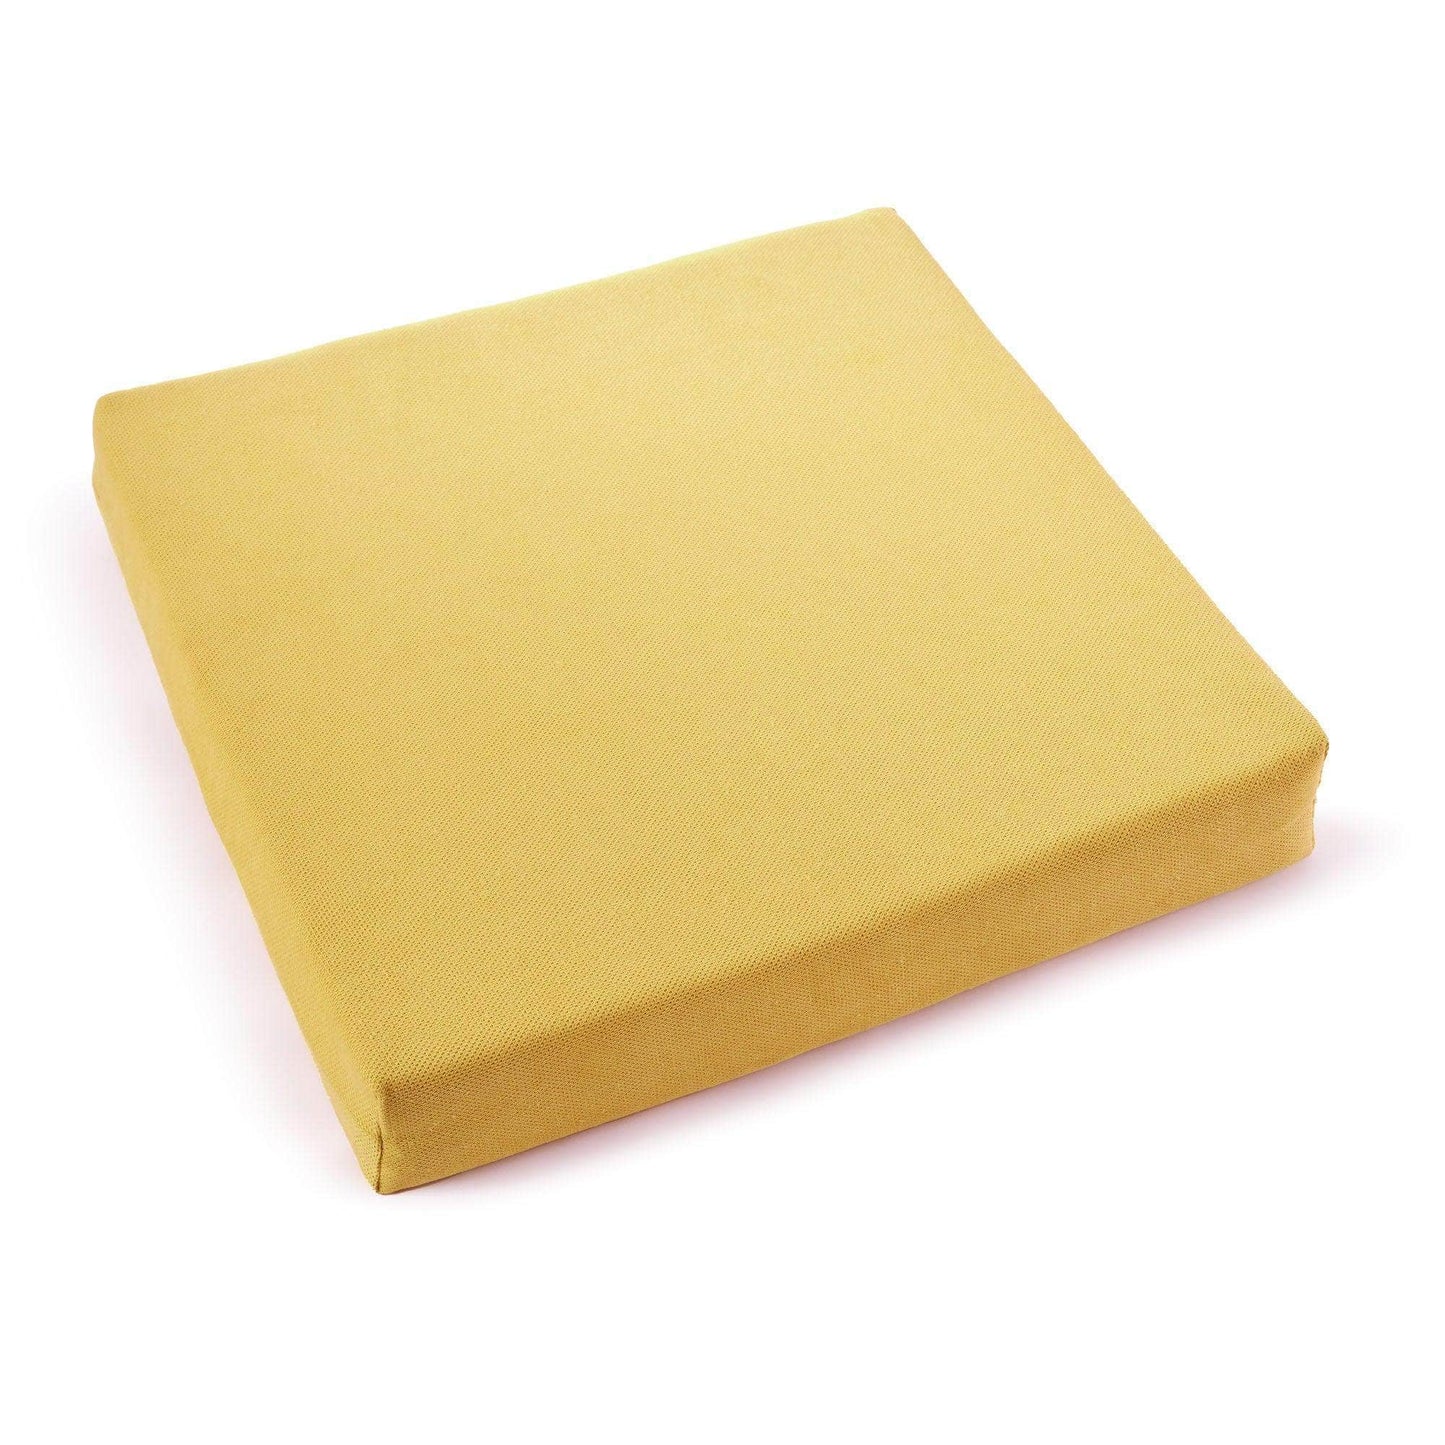 Penguin Group Cushions Yellow Square Sponge Cushion 50×52×8 cm